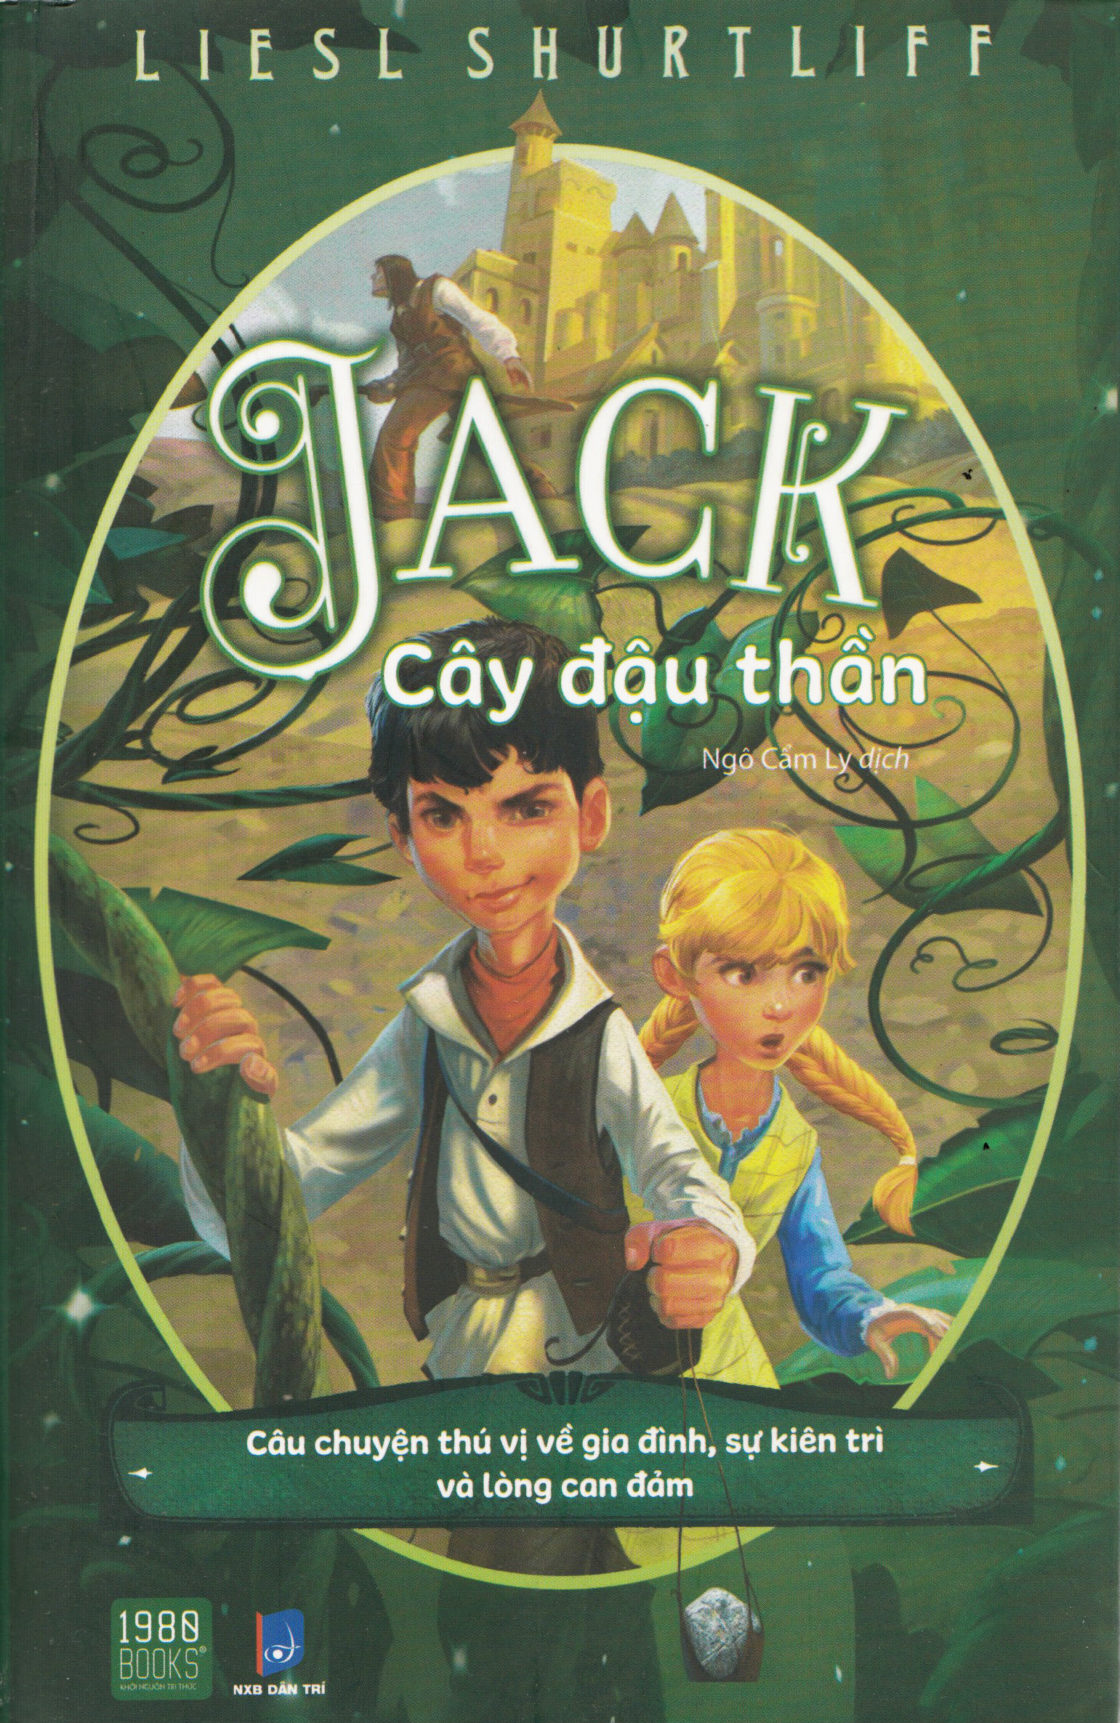 Jack and the Beanstalk (Vietnamese)